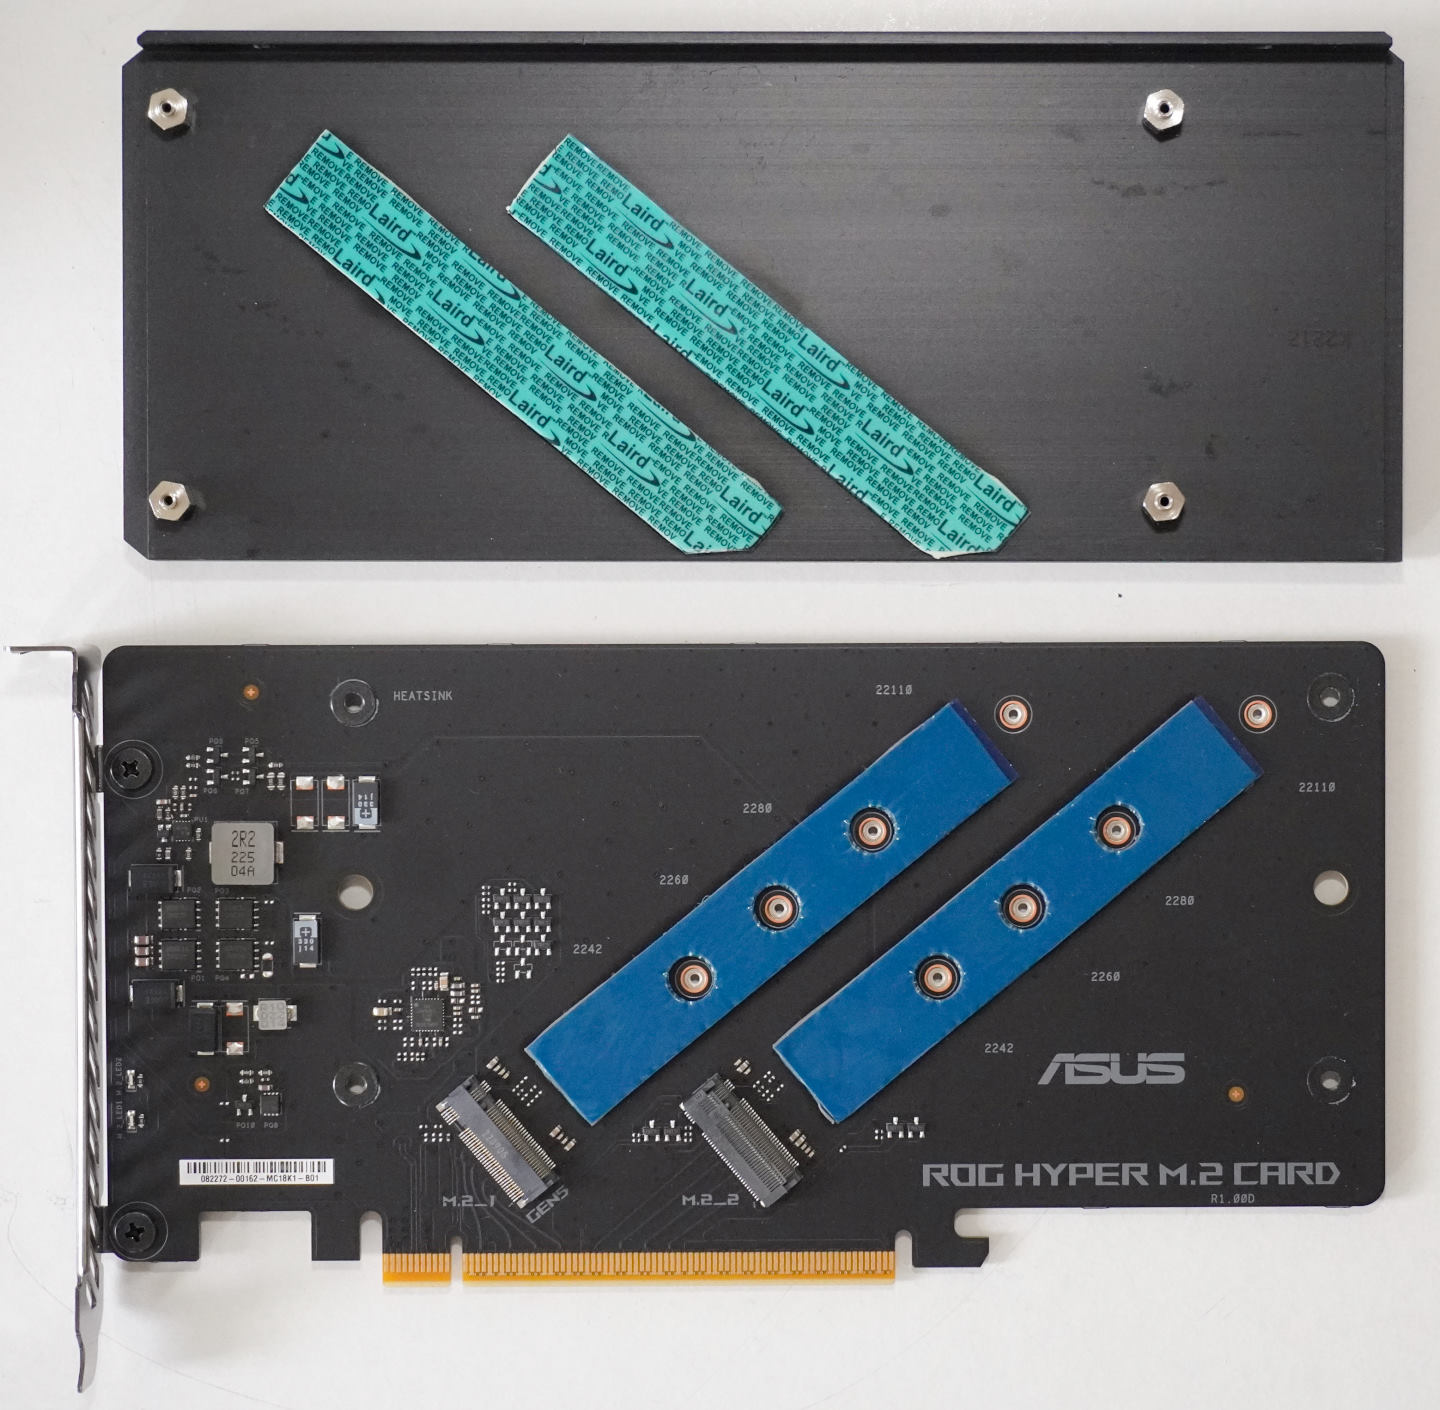 ROG Hyper M.2轉接卡具有2條M.2插槽，分別支援PCIe Gen 5x4、PCIe Gen 4x4傳輸模式。